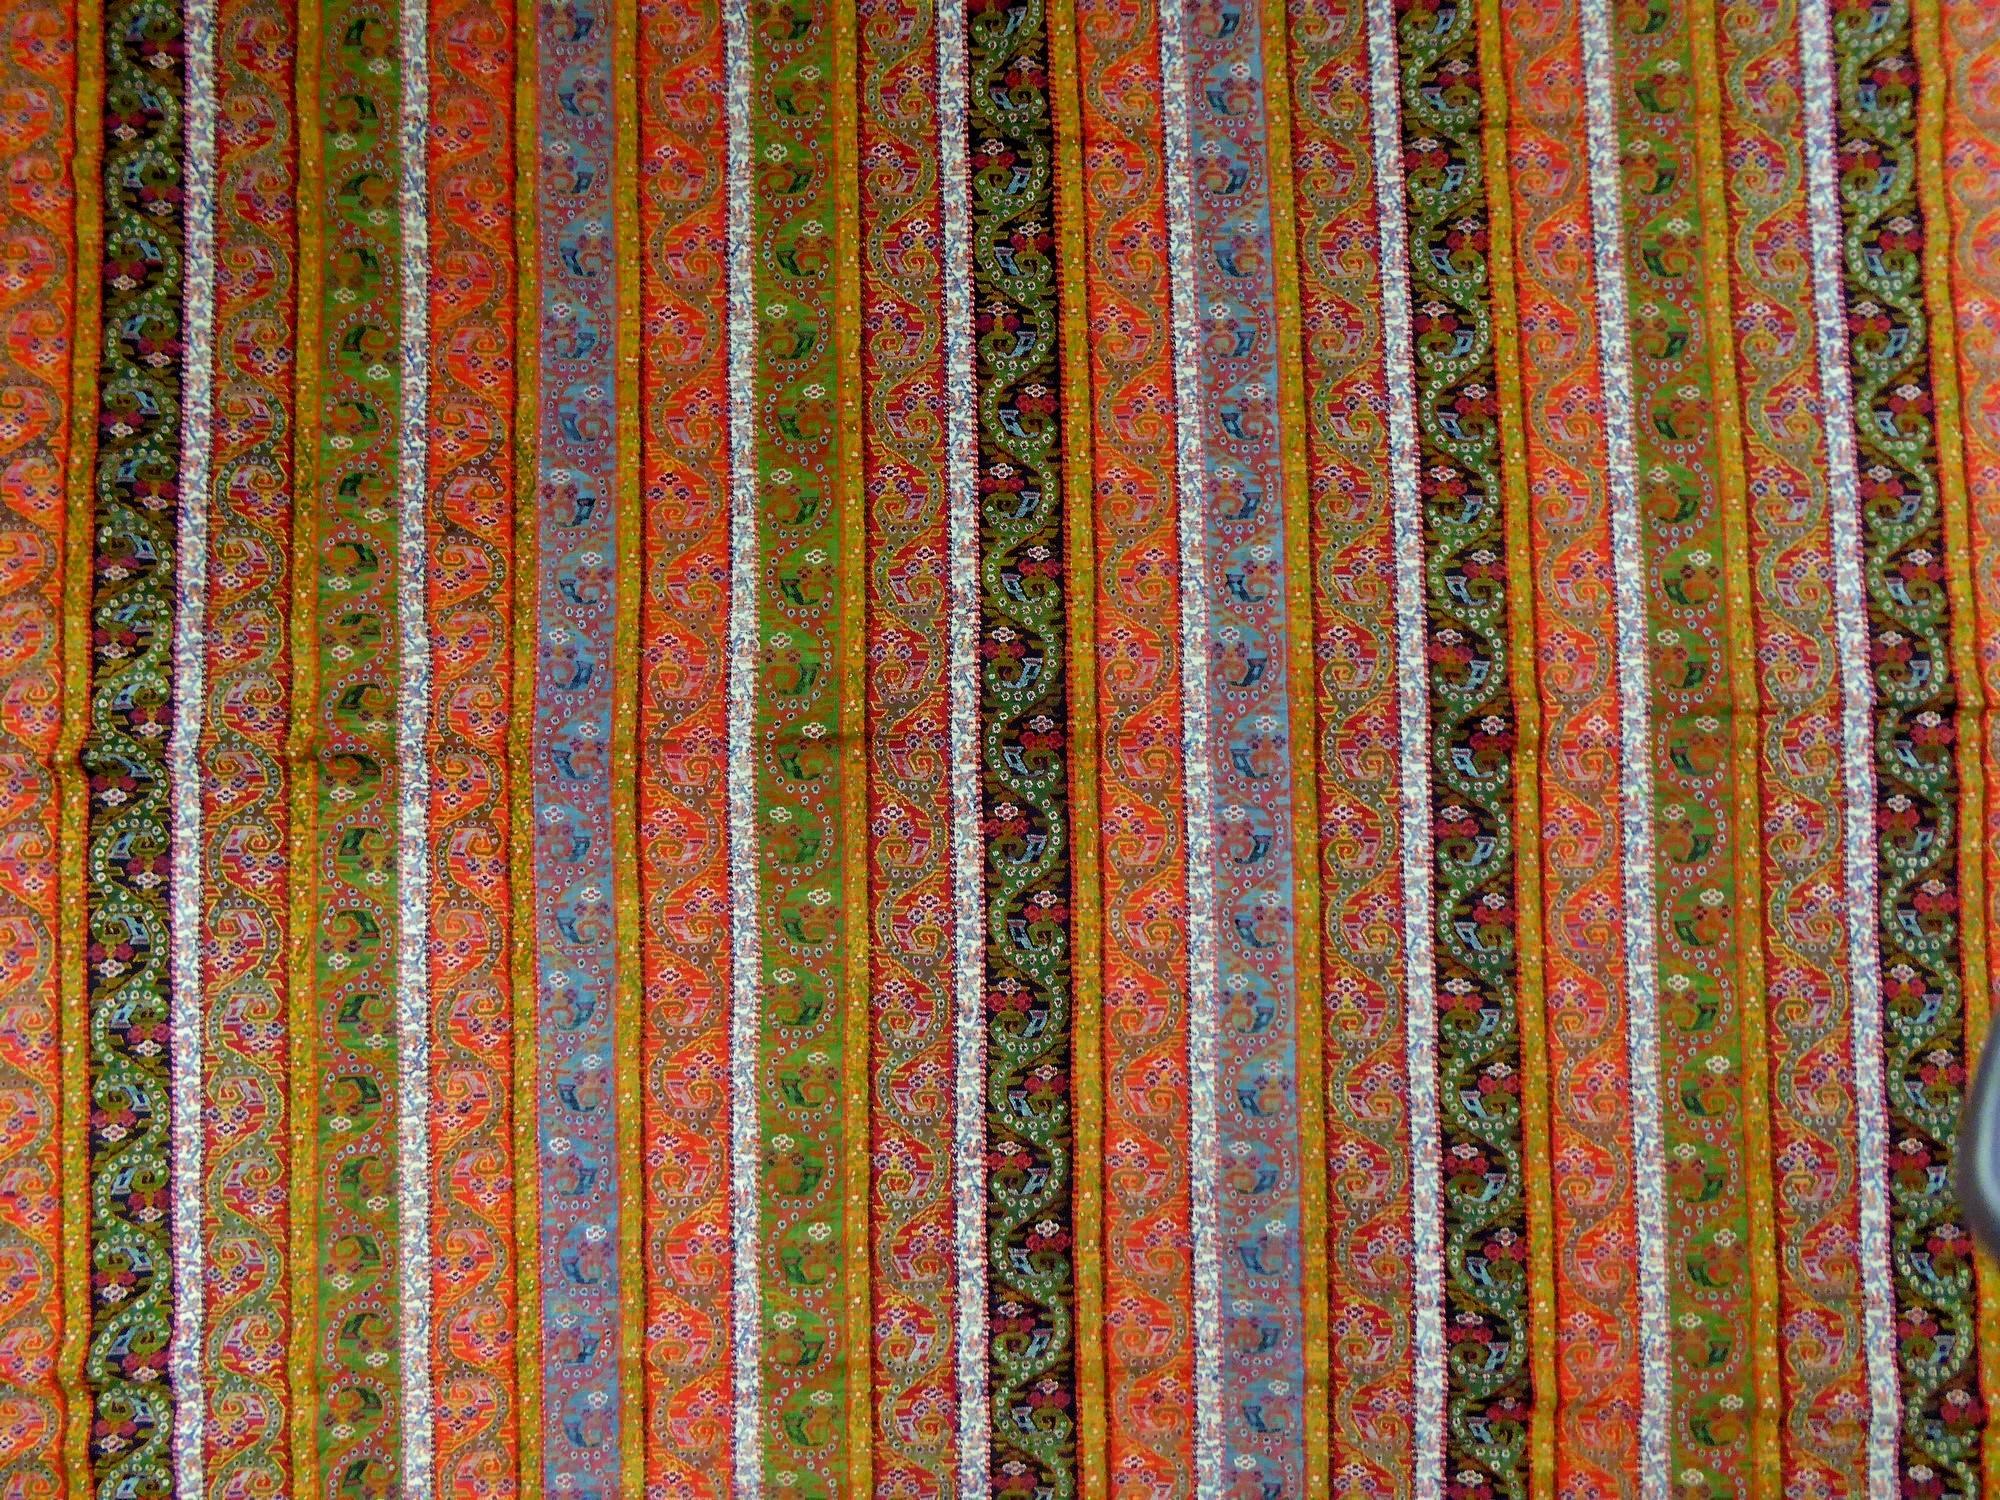 Twill weave striped kashmir shawl  - India or Persia 19th century 2